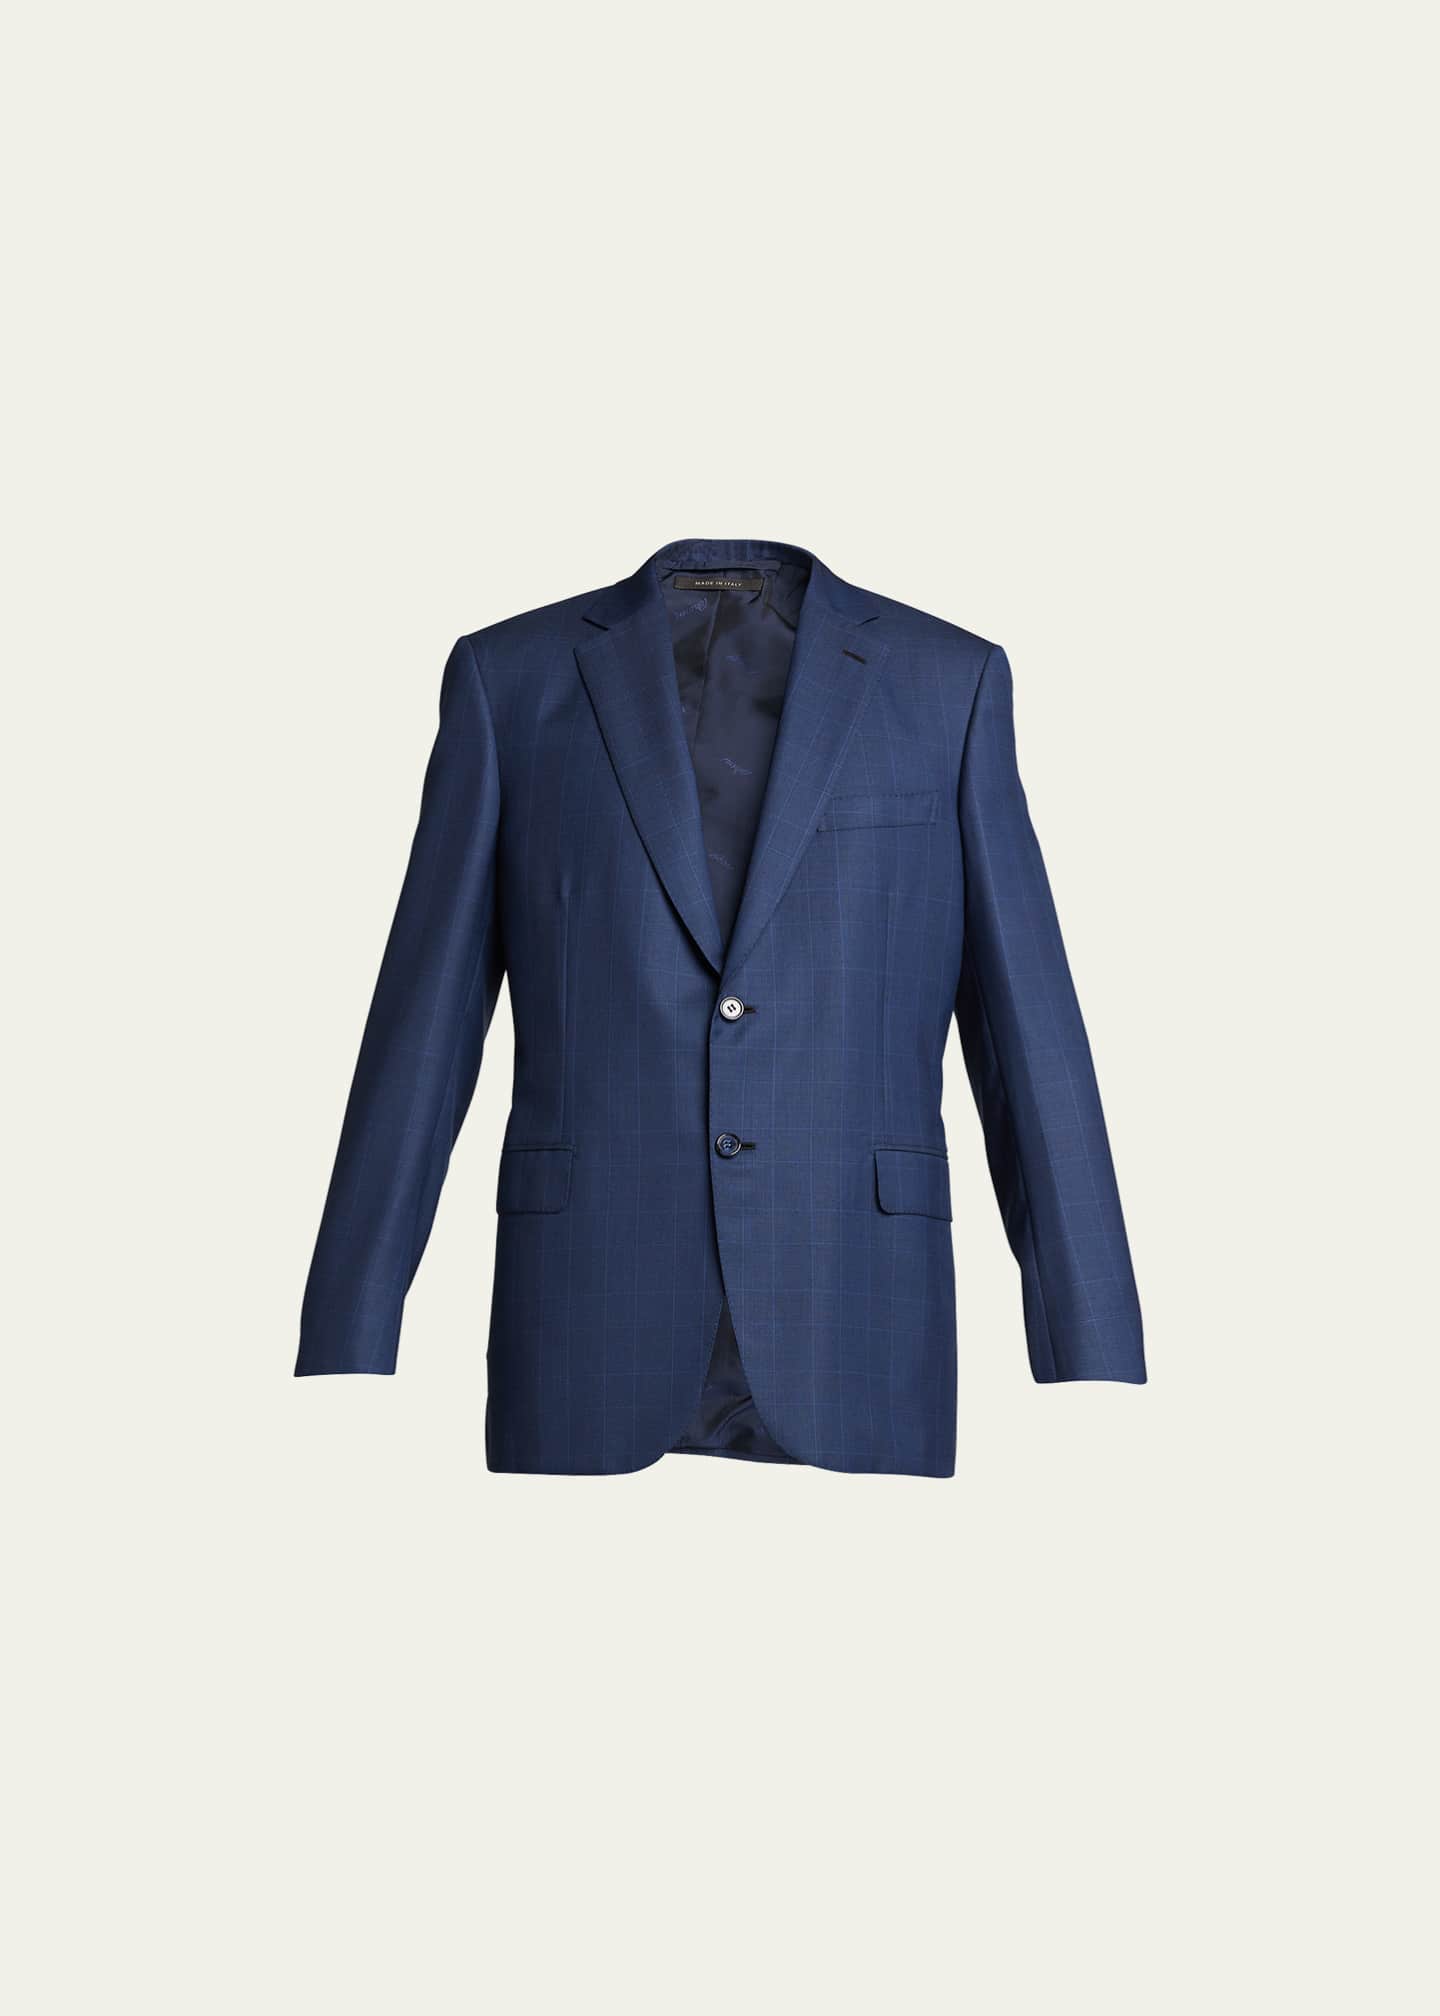 Brioni Men's Plaid Wool Suit - Bergdorf Goodman